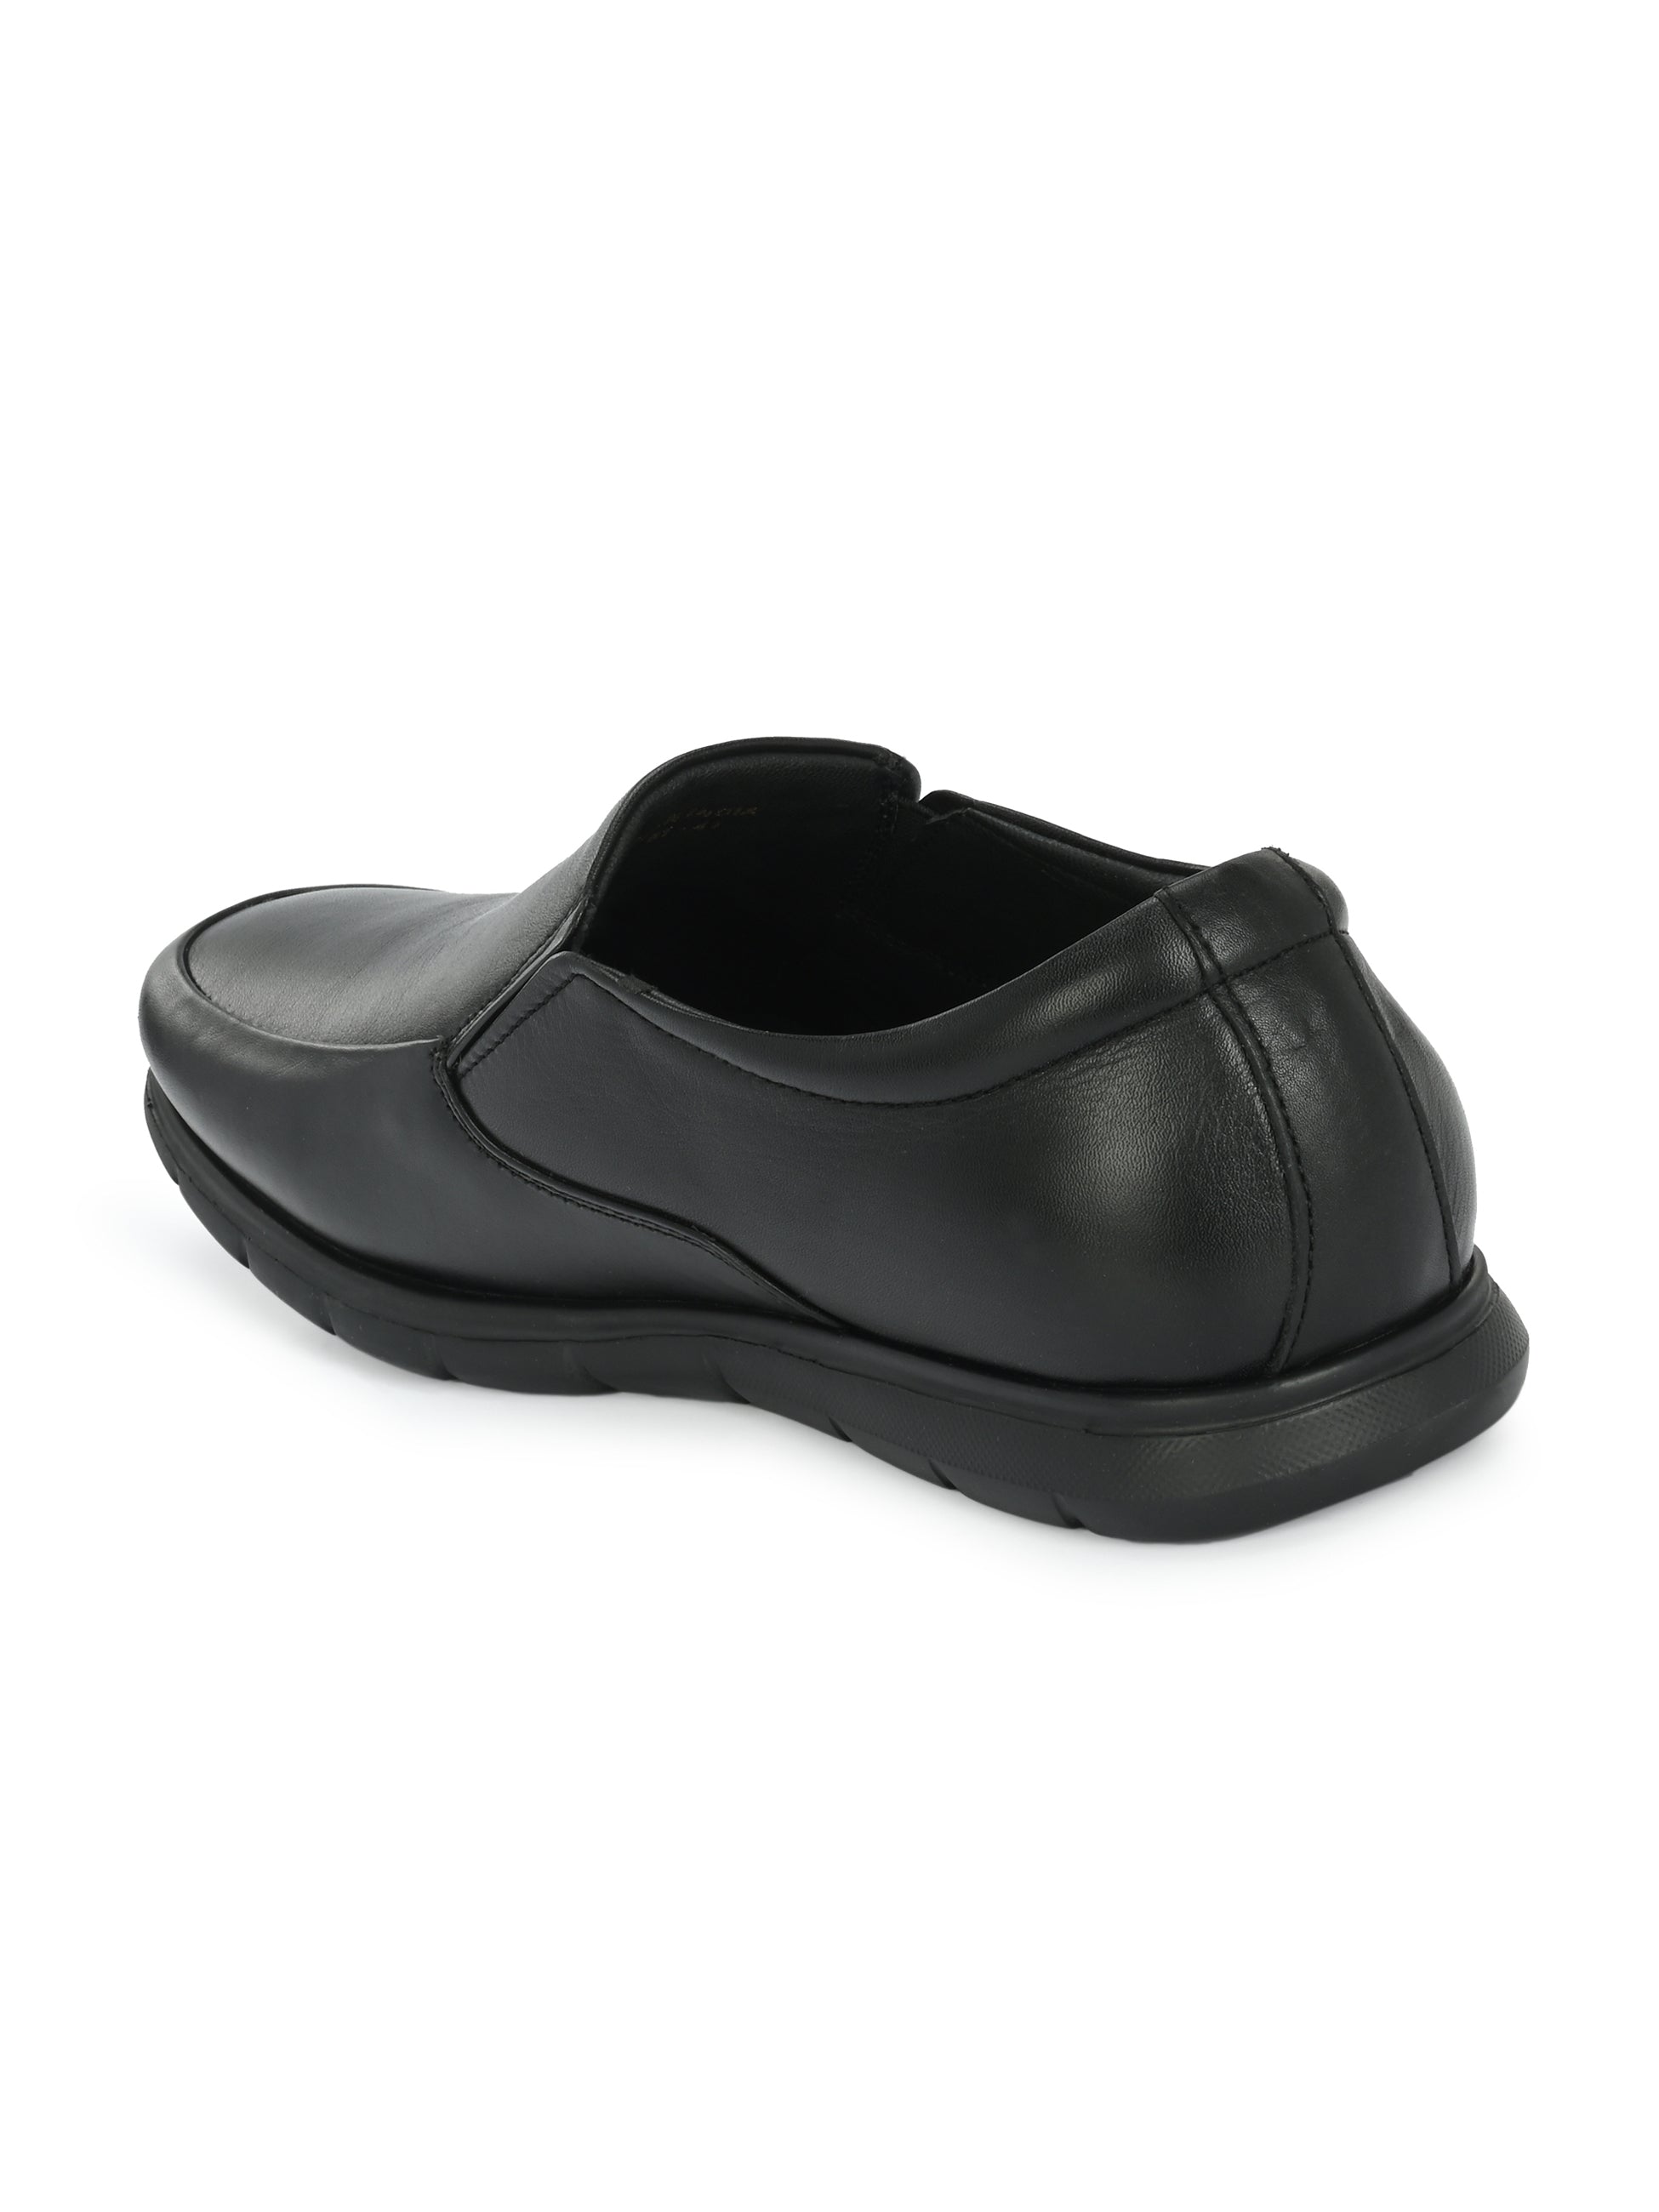 Zero Gravity Premium Slip On Shoes For Men